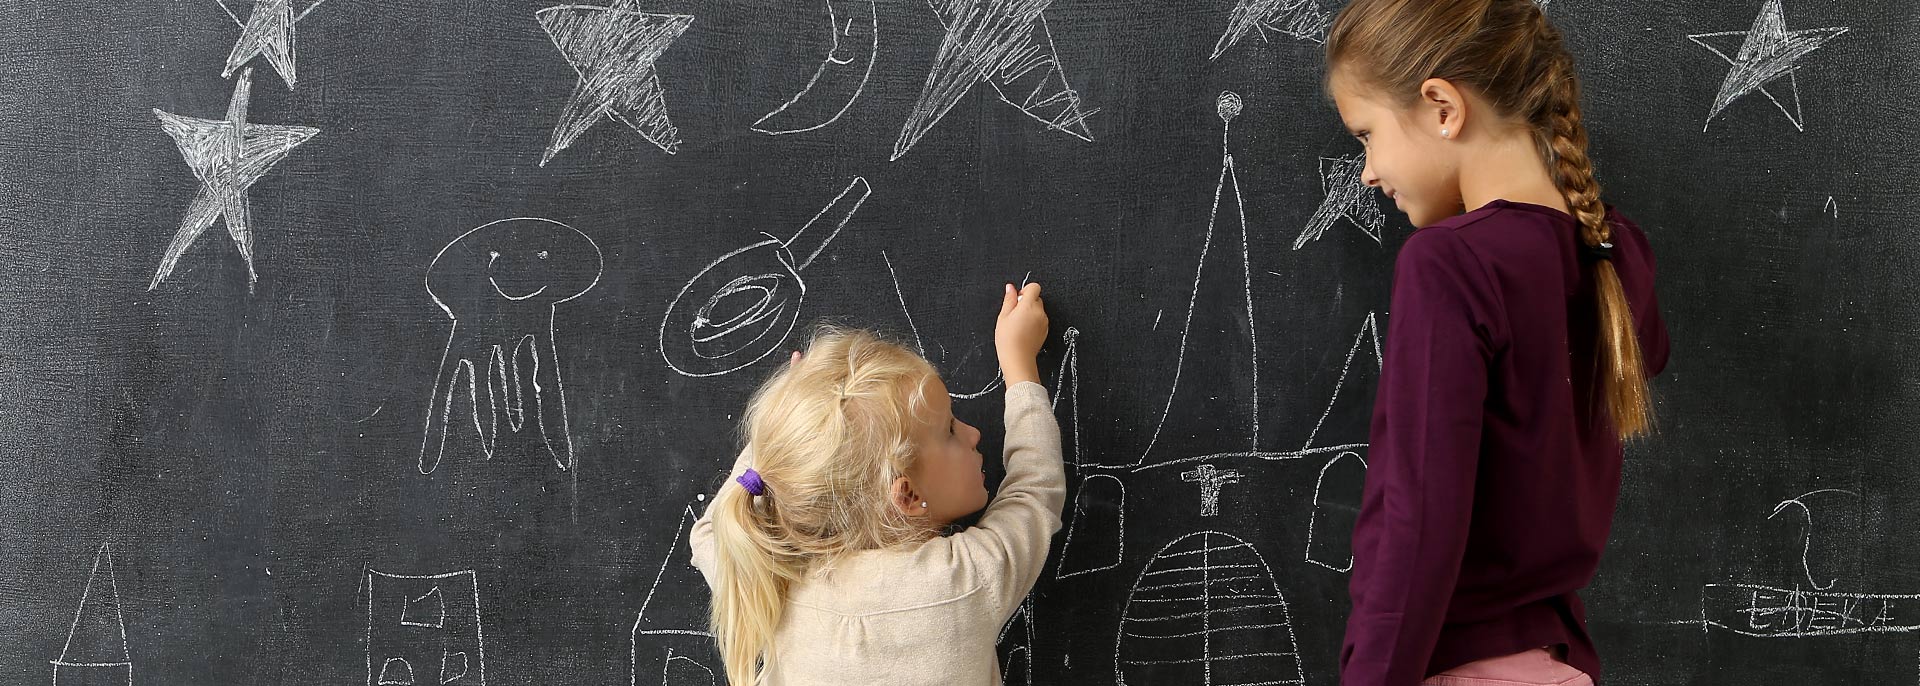 Kinder malen an Tafel mit Kreide